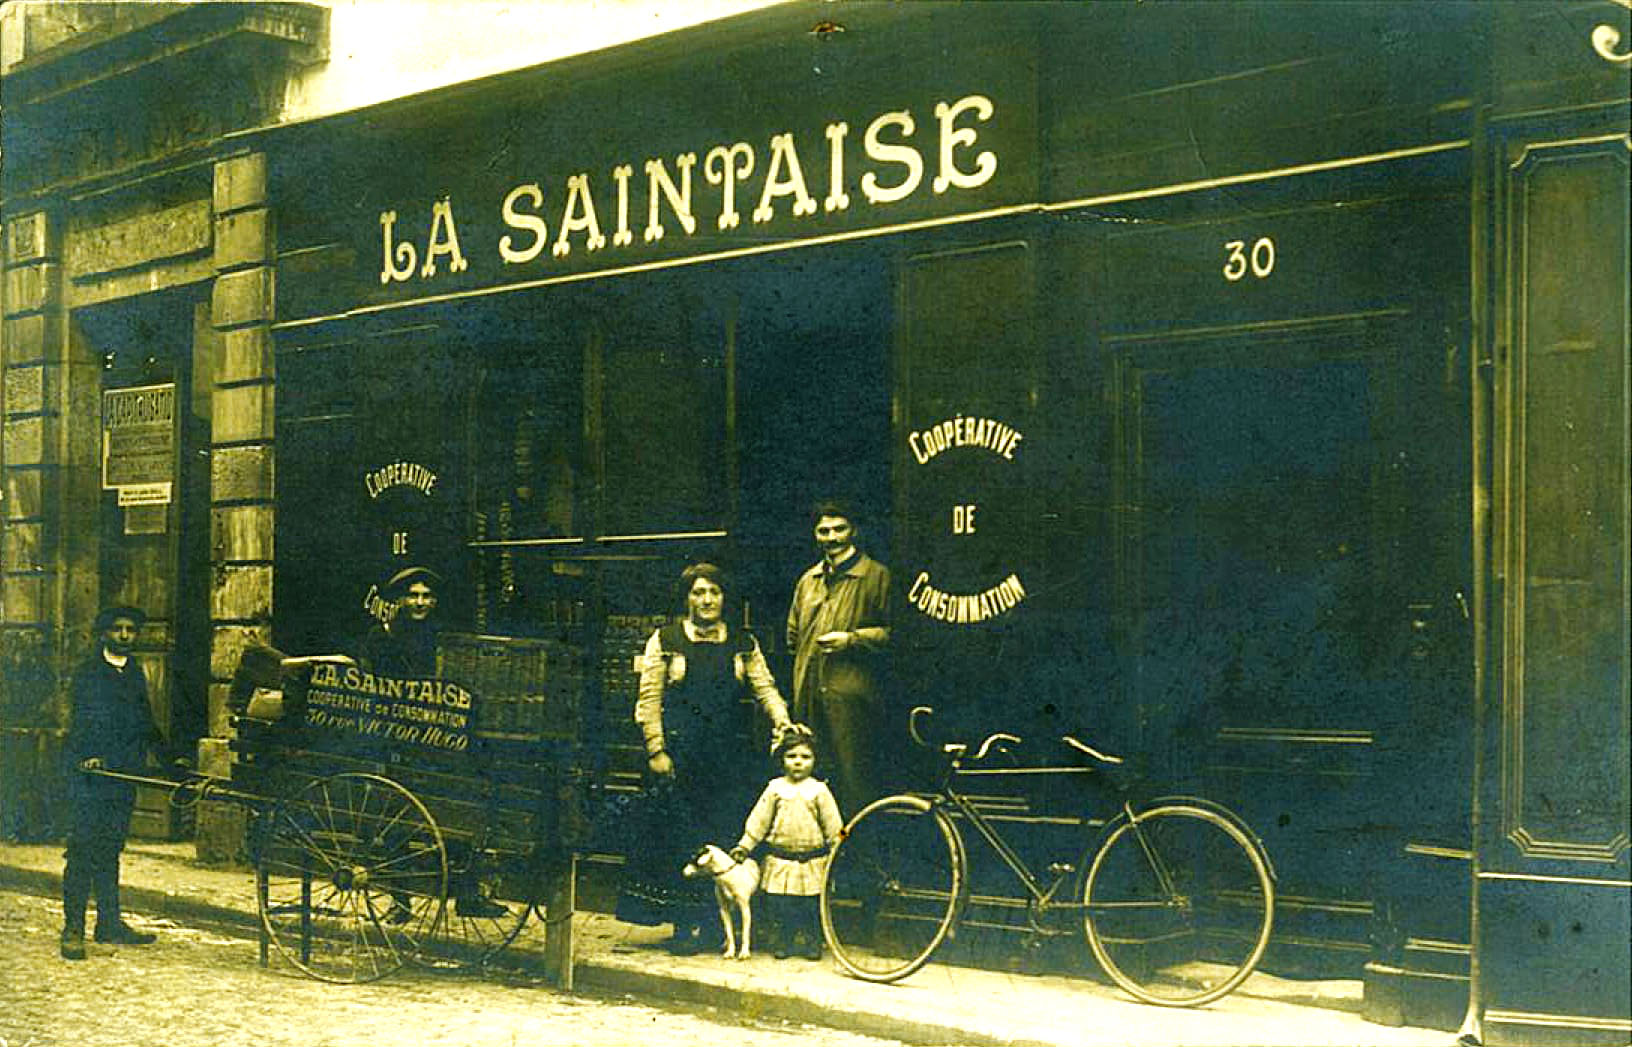 La Saintaise